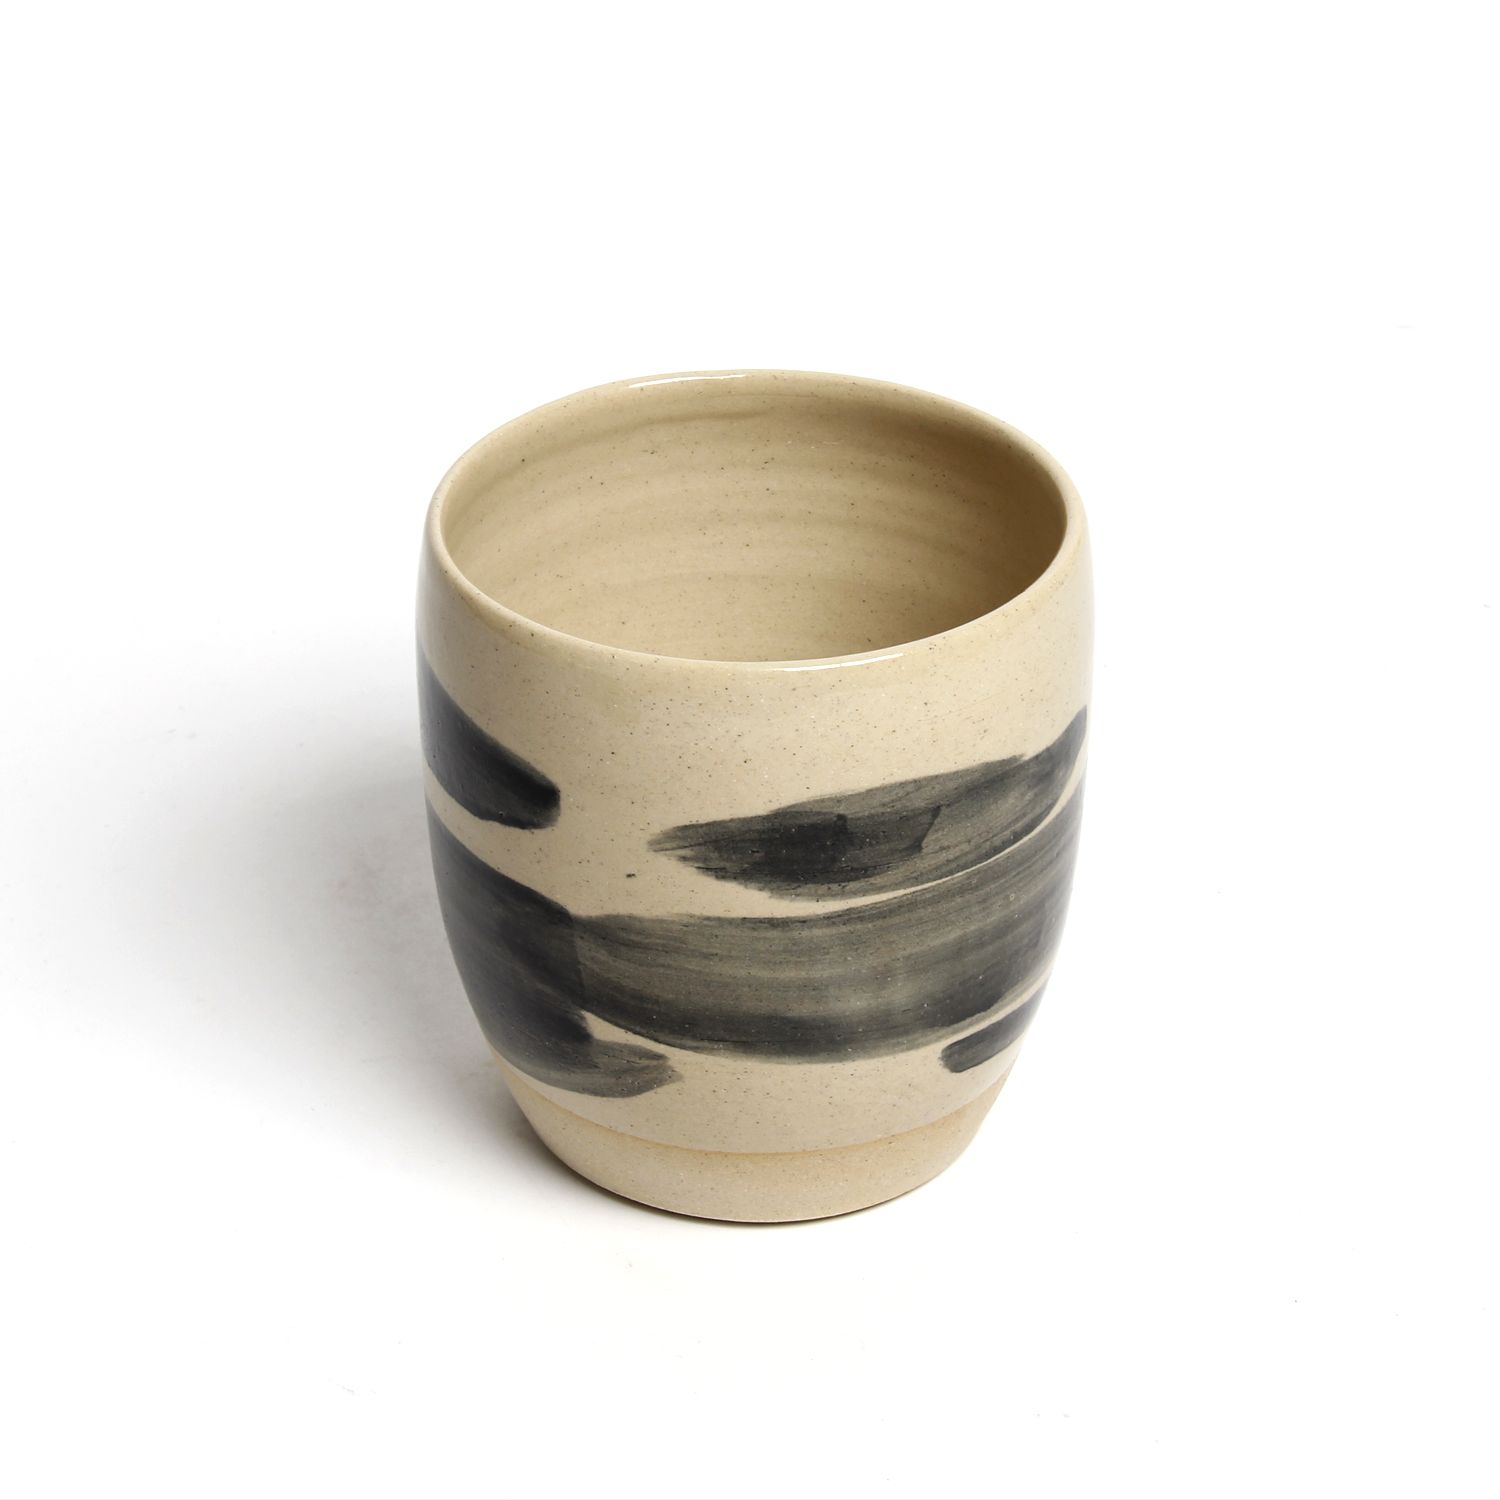 Suzanne Morrissette: Painter’s Planter Vase Product Image 2 of 4